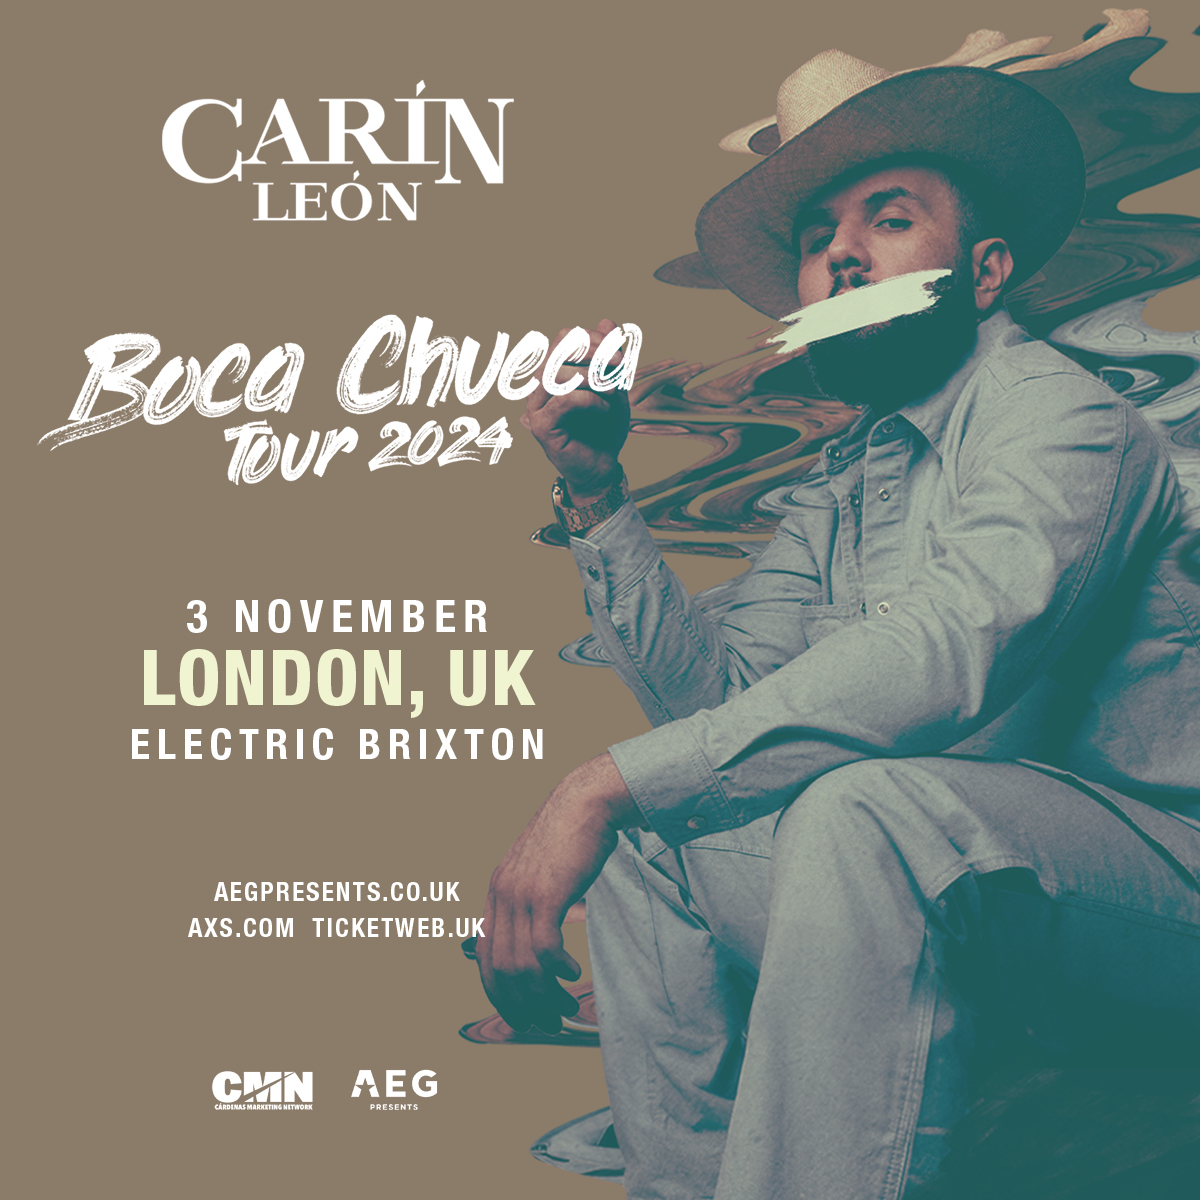 ON SALE NOW! @carinleonofi | @electricbrixton | 3 November 2024 Tickets on sale now: aegp.uk/CarinLeon